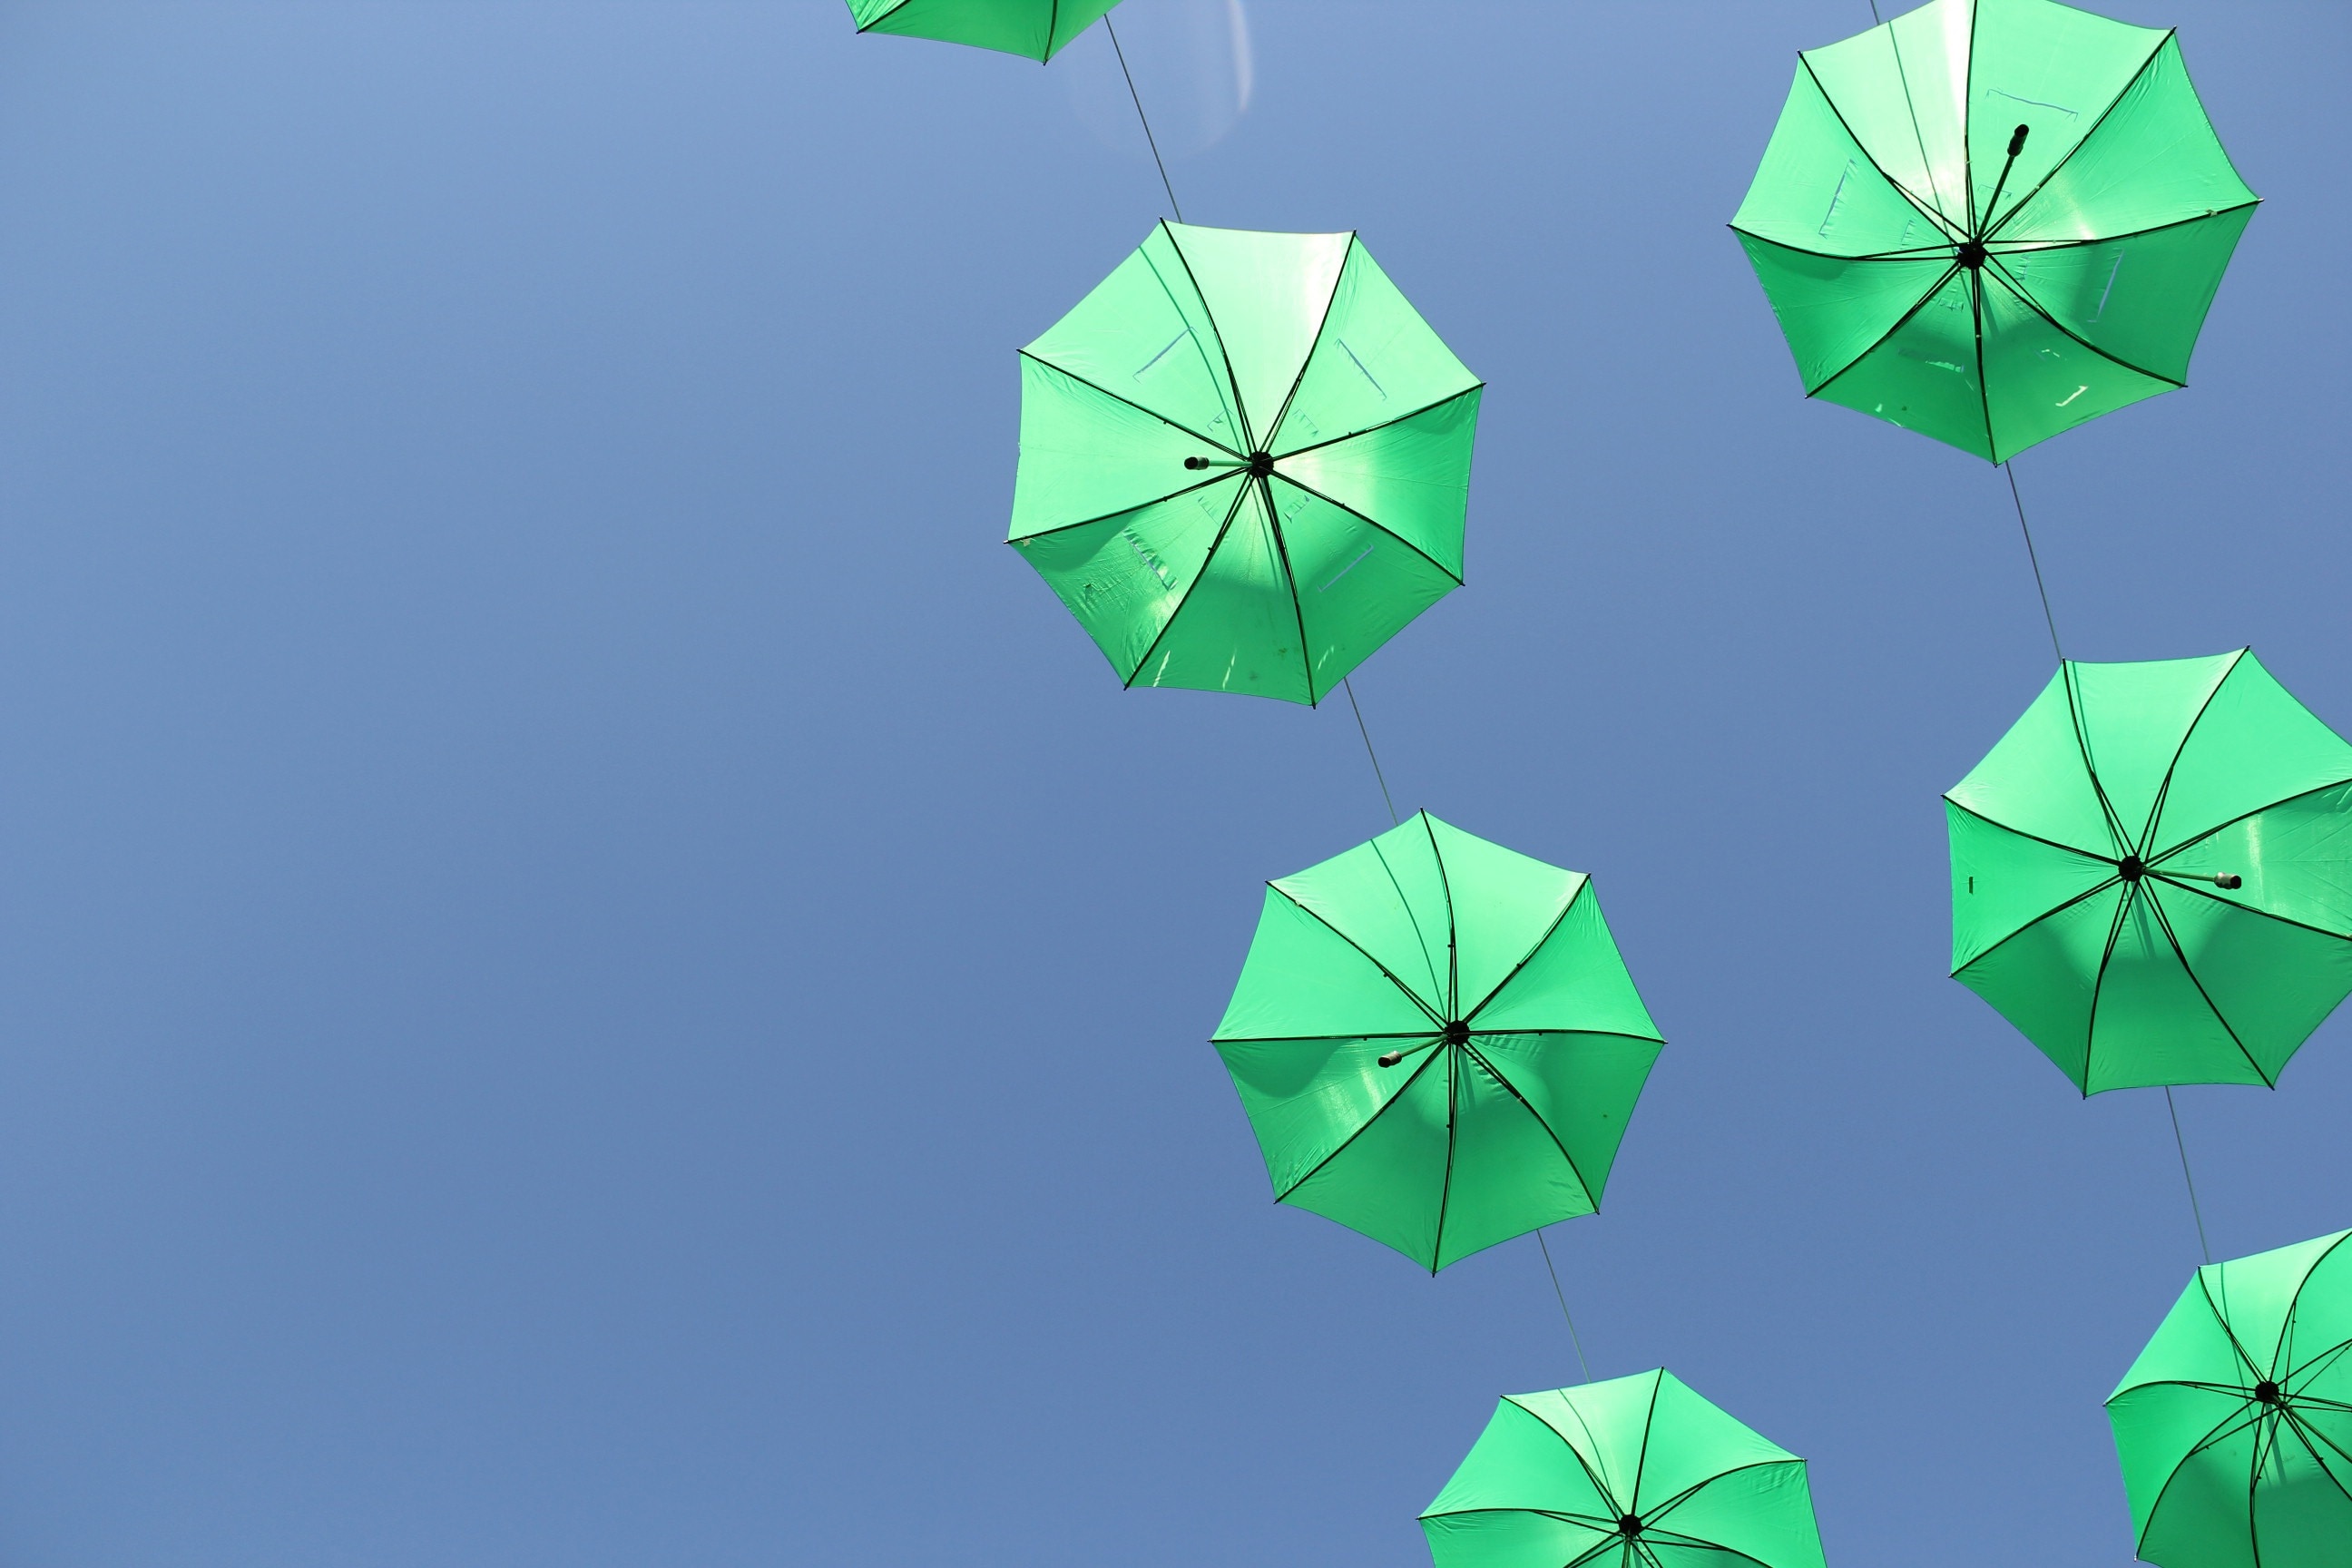 green folding umbrellas